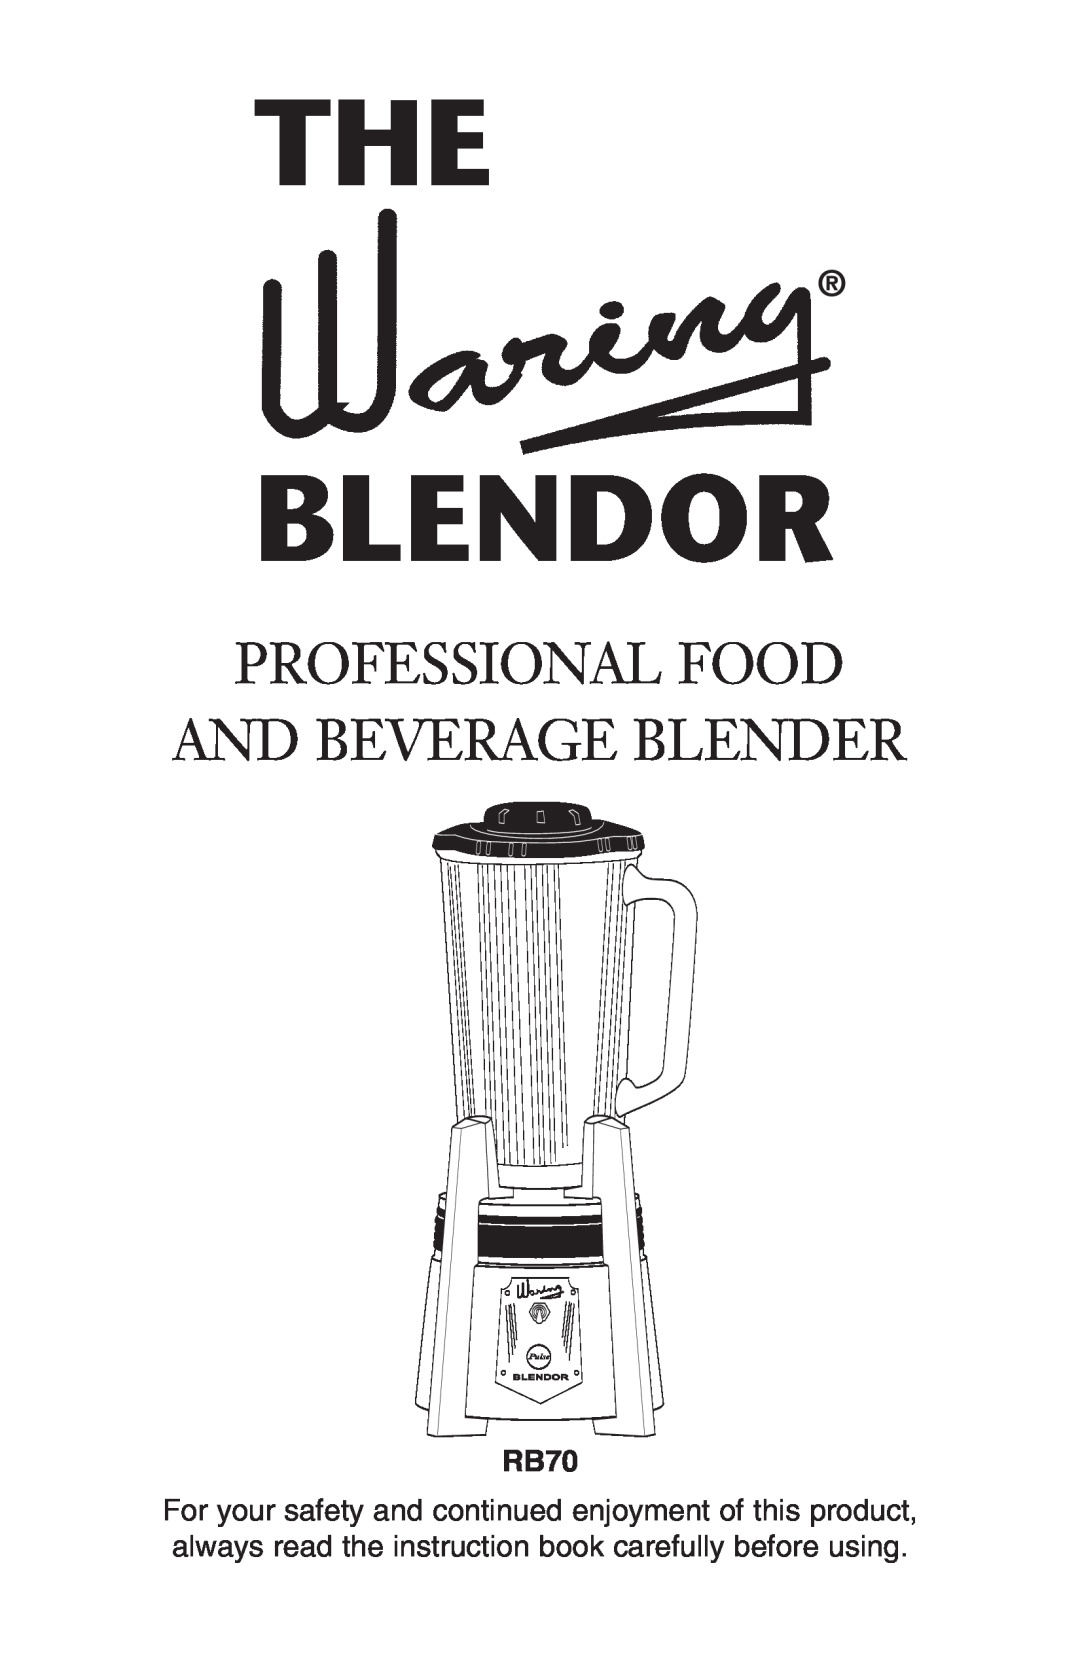 Conair RB70 manual Blendor, Professional Food And Beverage Blender 